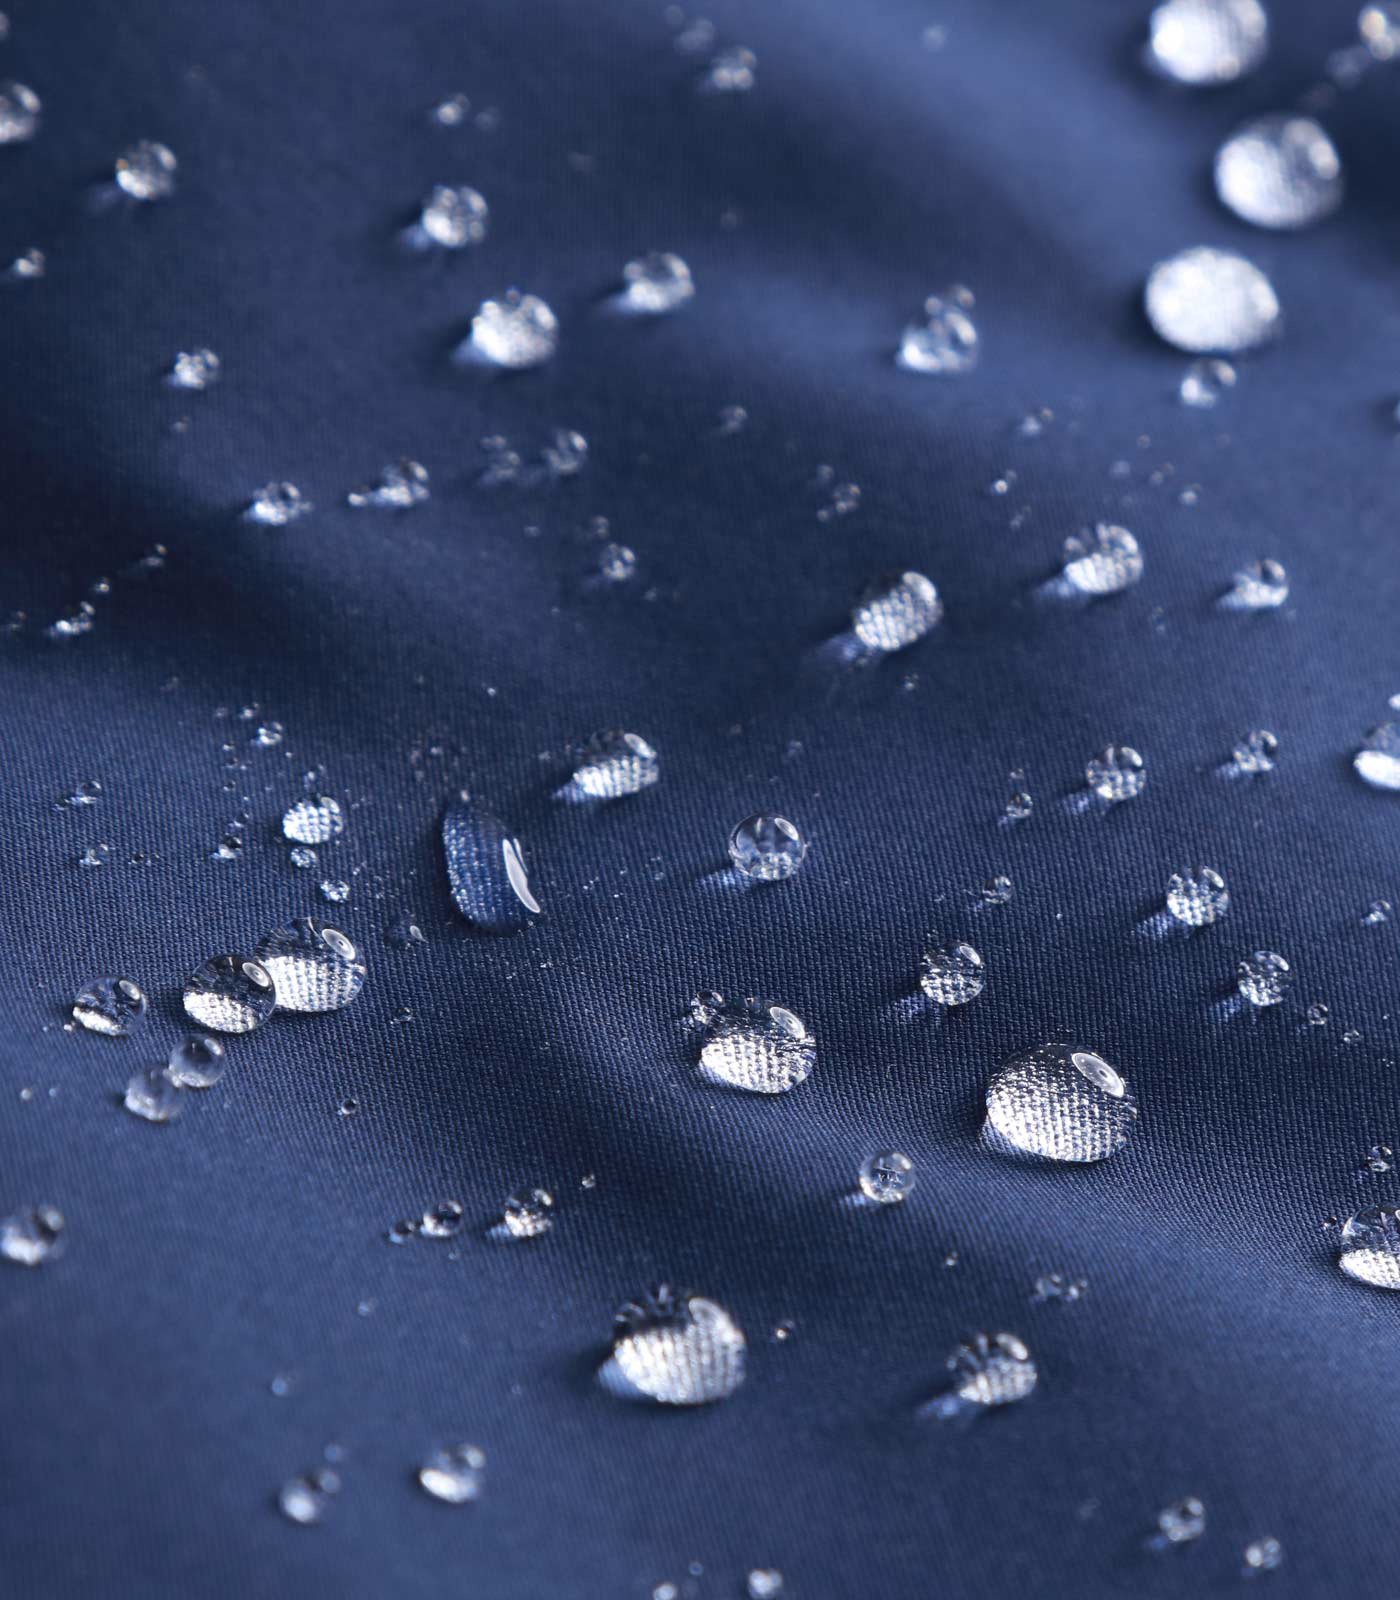 Cómo repele el agua la ropa impermeable?